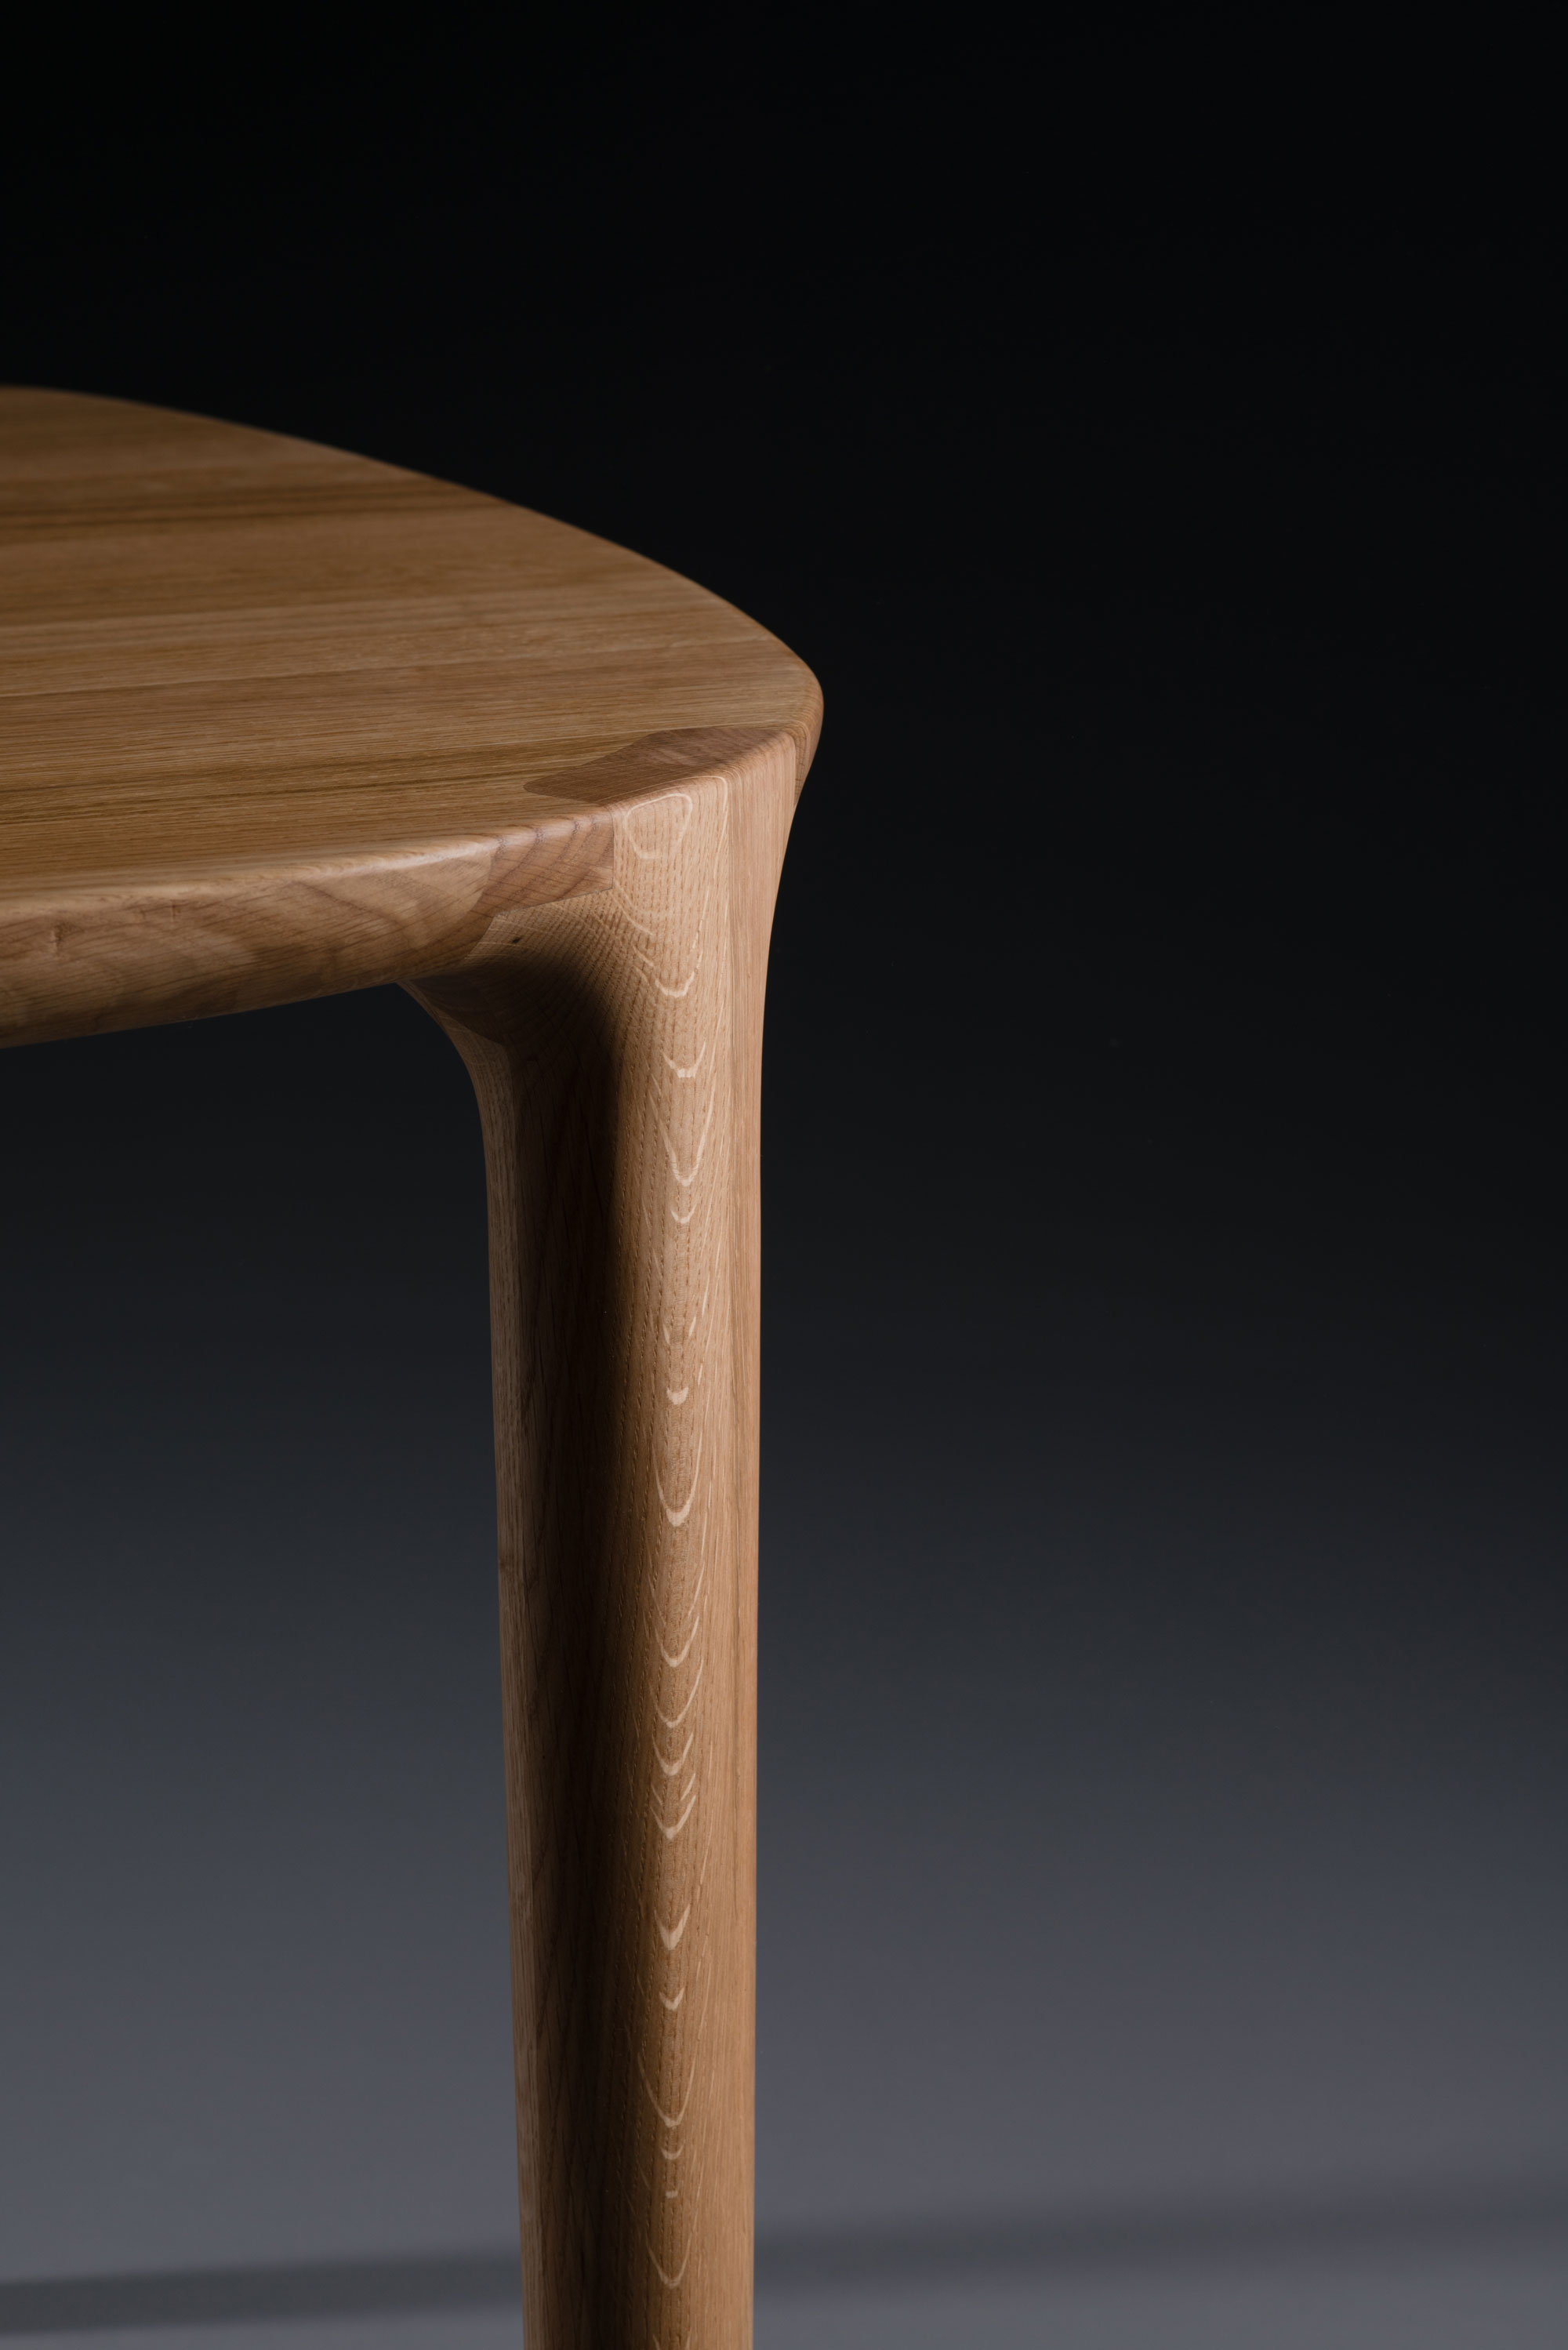 wu wood chair details - sedia dettaglio